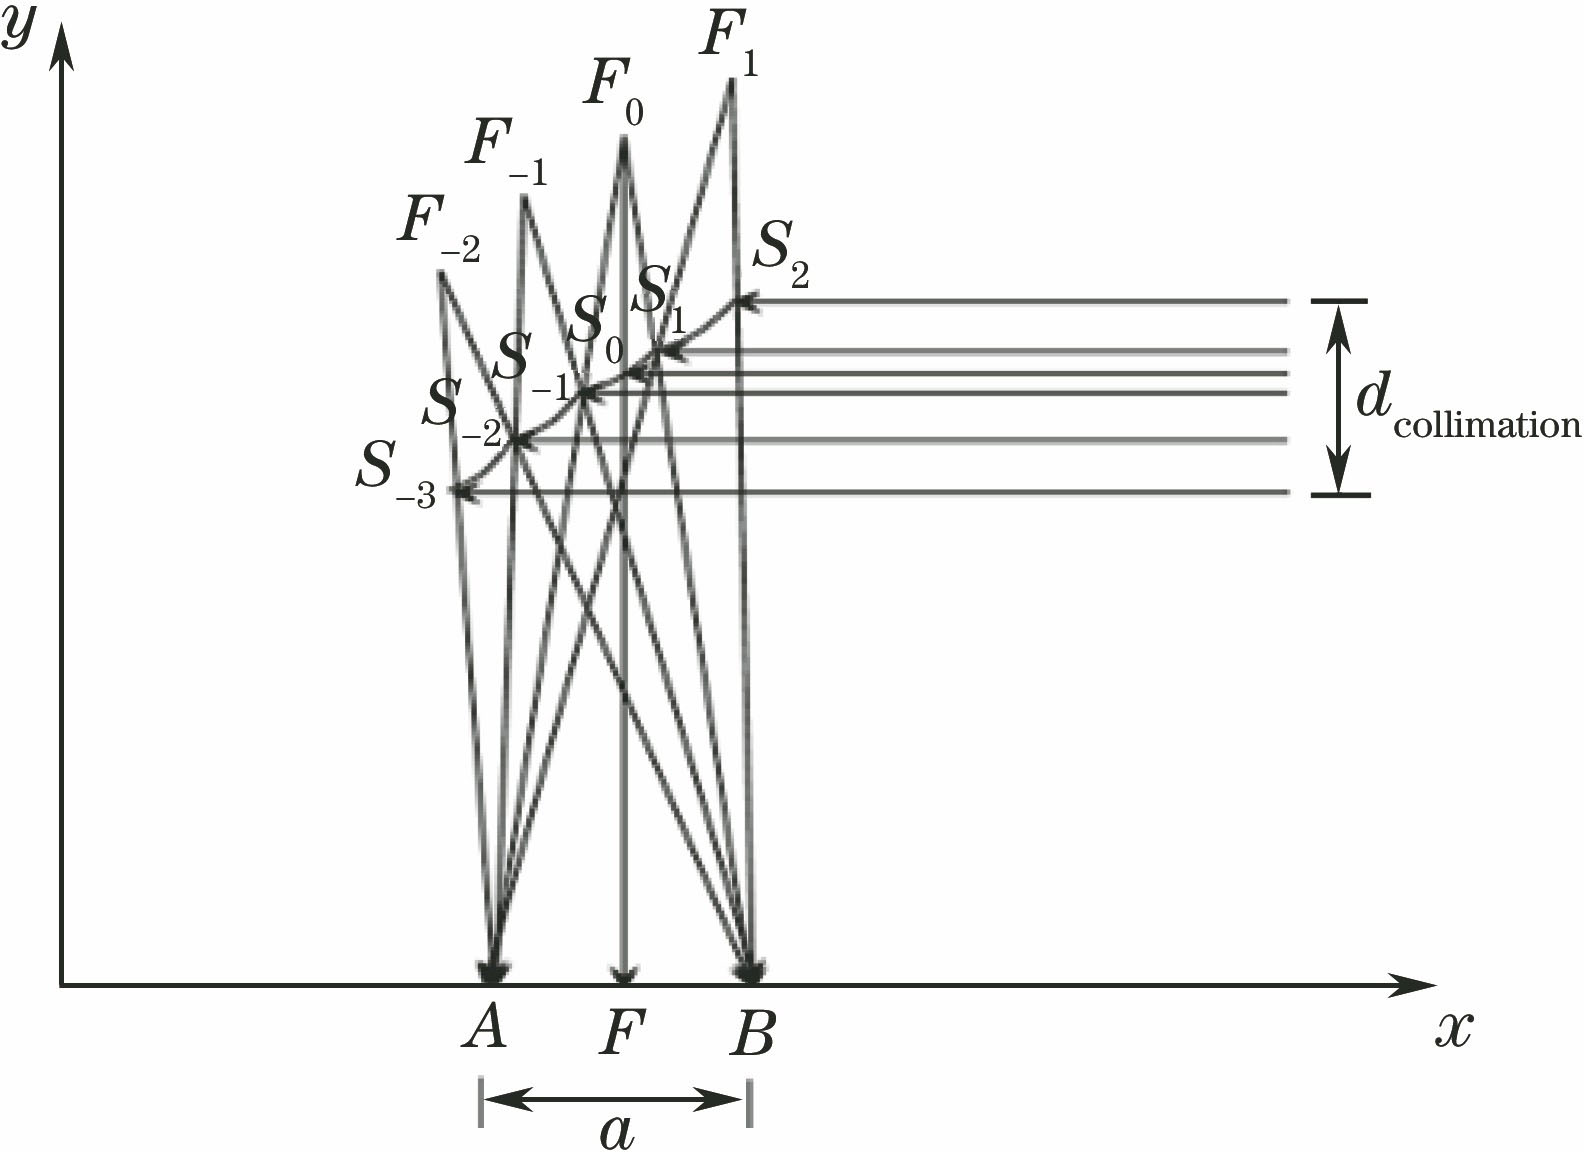 Principle of parabolic band integration mirror for rectangular spot